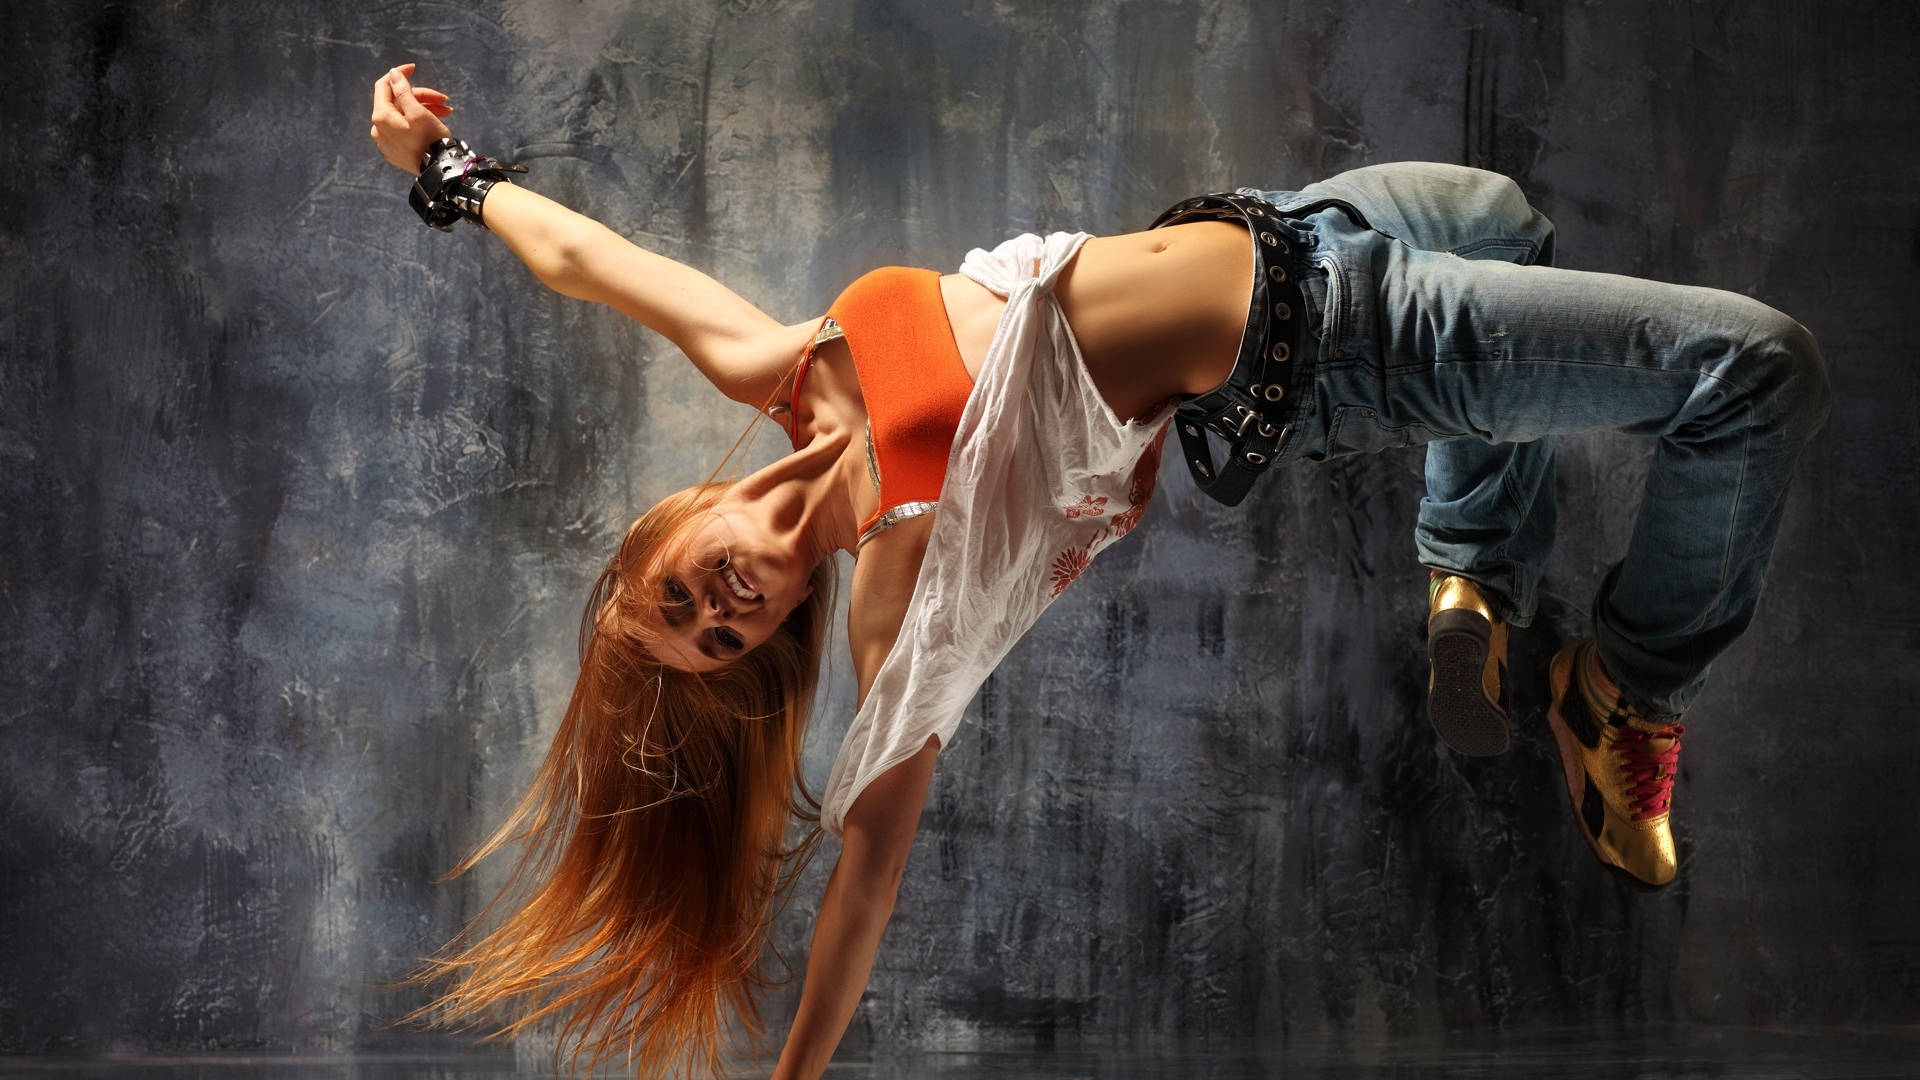 Tough Hip Hop Girl Dance Pose Stock Photo 15347161 | Shutterstock